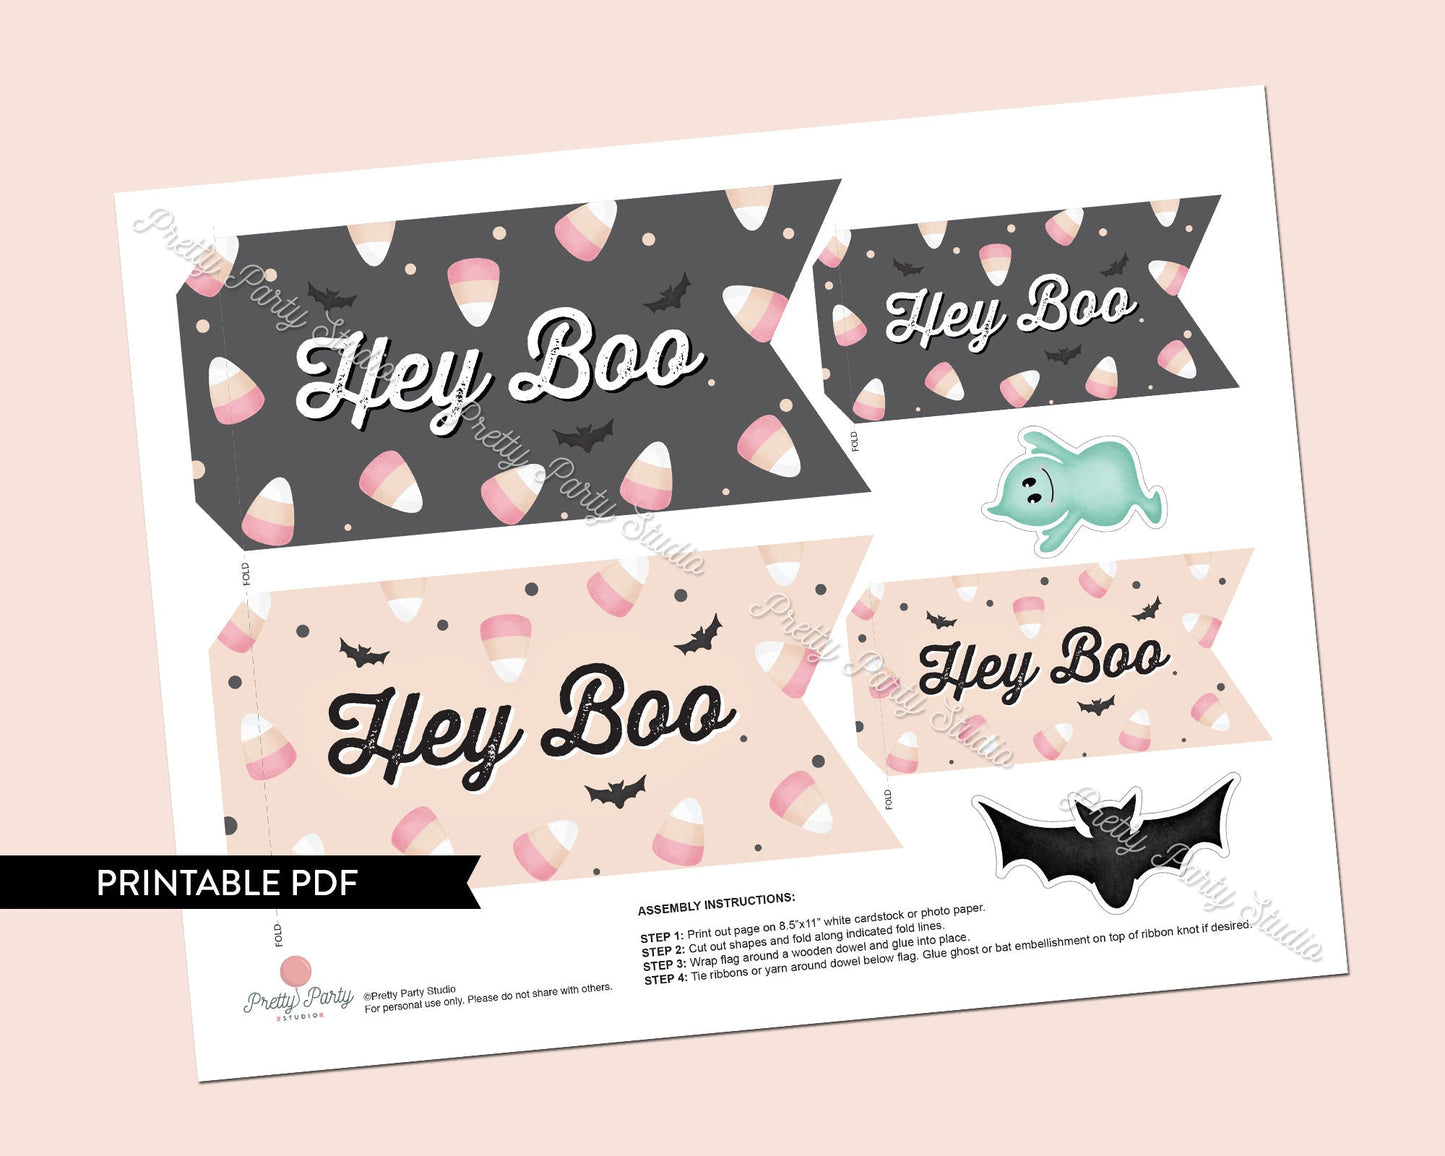 Hey Boo Halloween Pennant Flag || Printable Boo Basket Flag || Halloween Wand || Photo Prop || Halloween Activities for Kids || H01